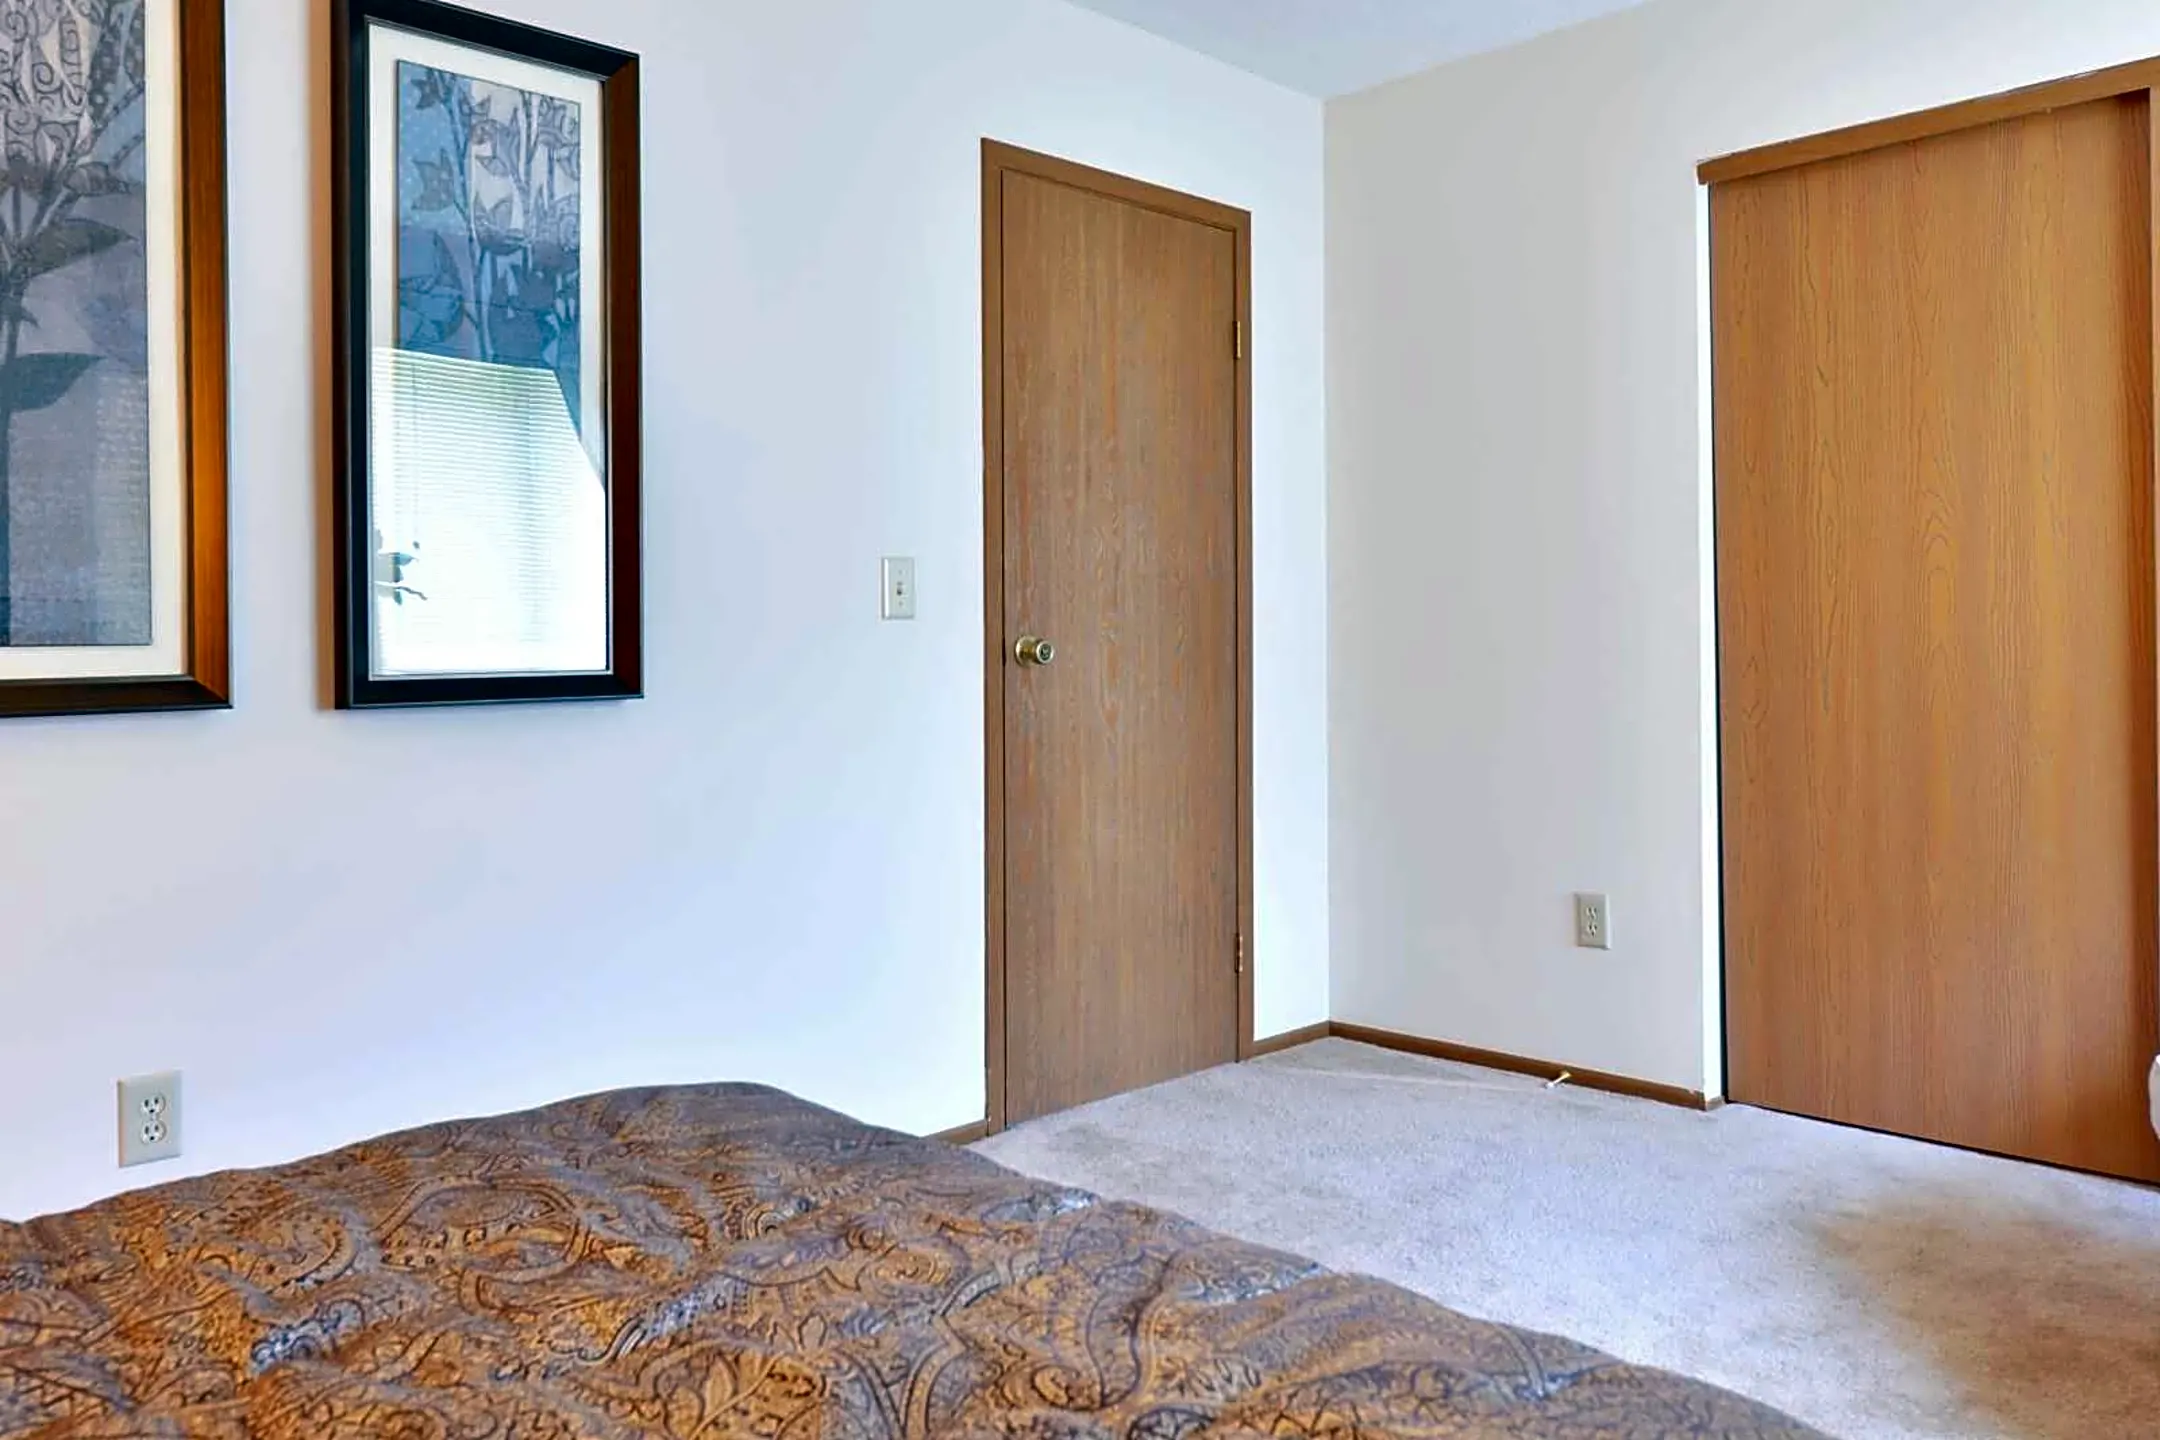 Bedroom - Stoney Creek Apartments - Reynoldsburg, OH